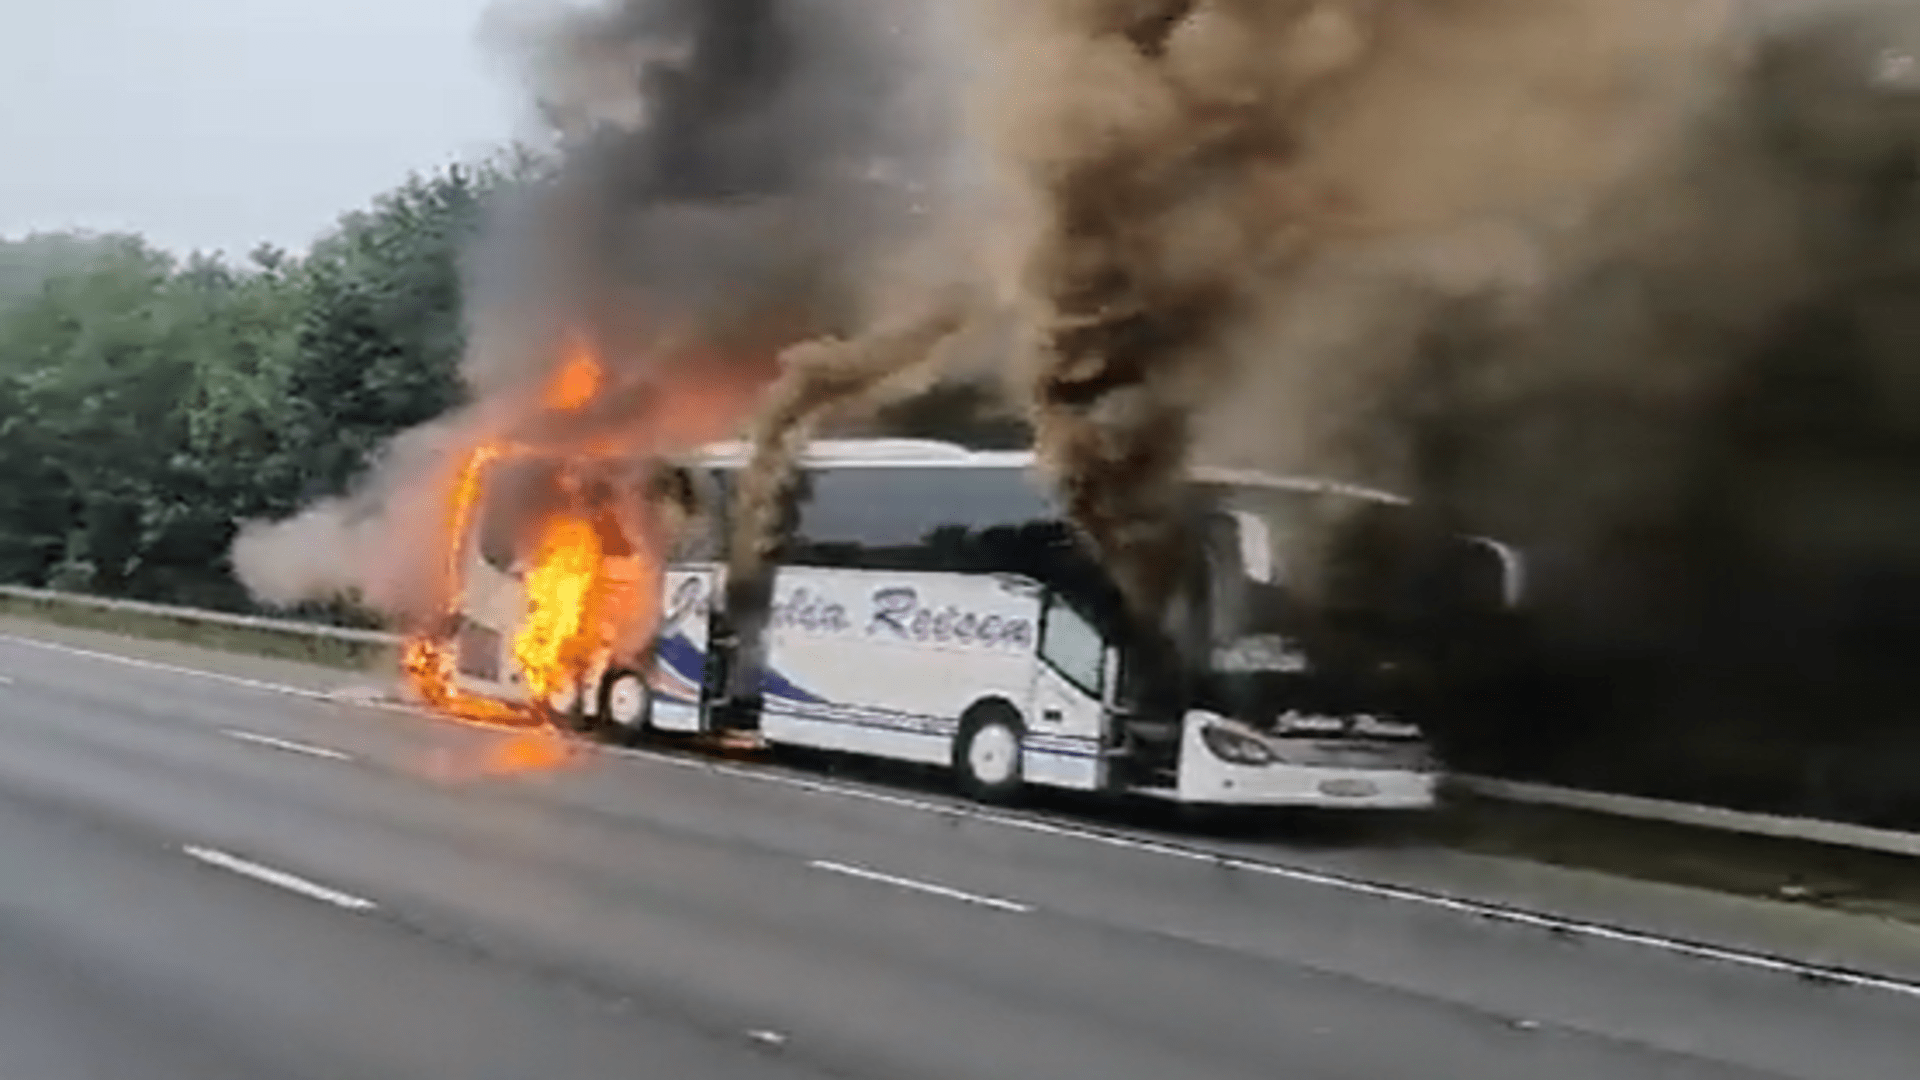 travellers choice coach fire